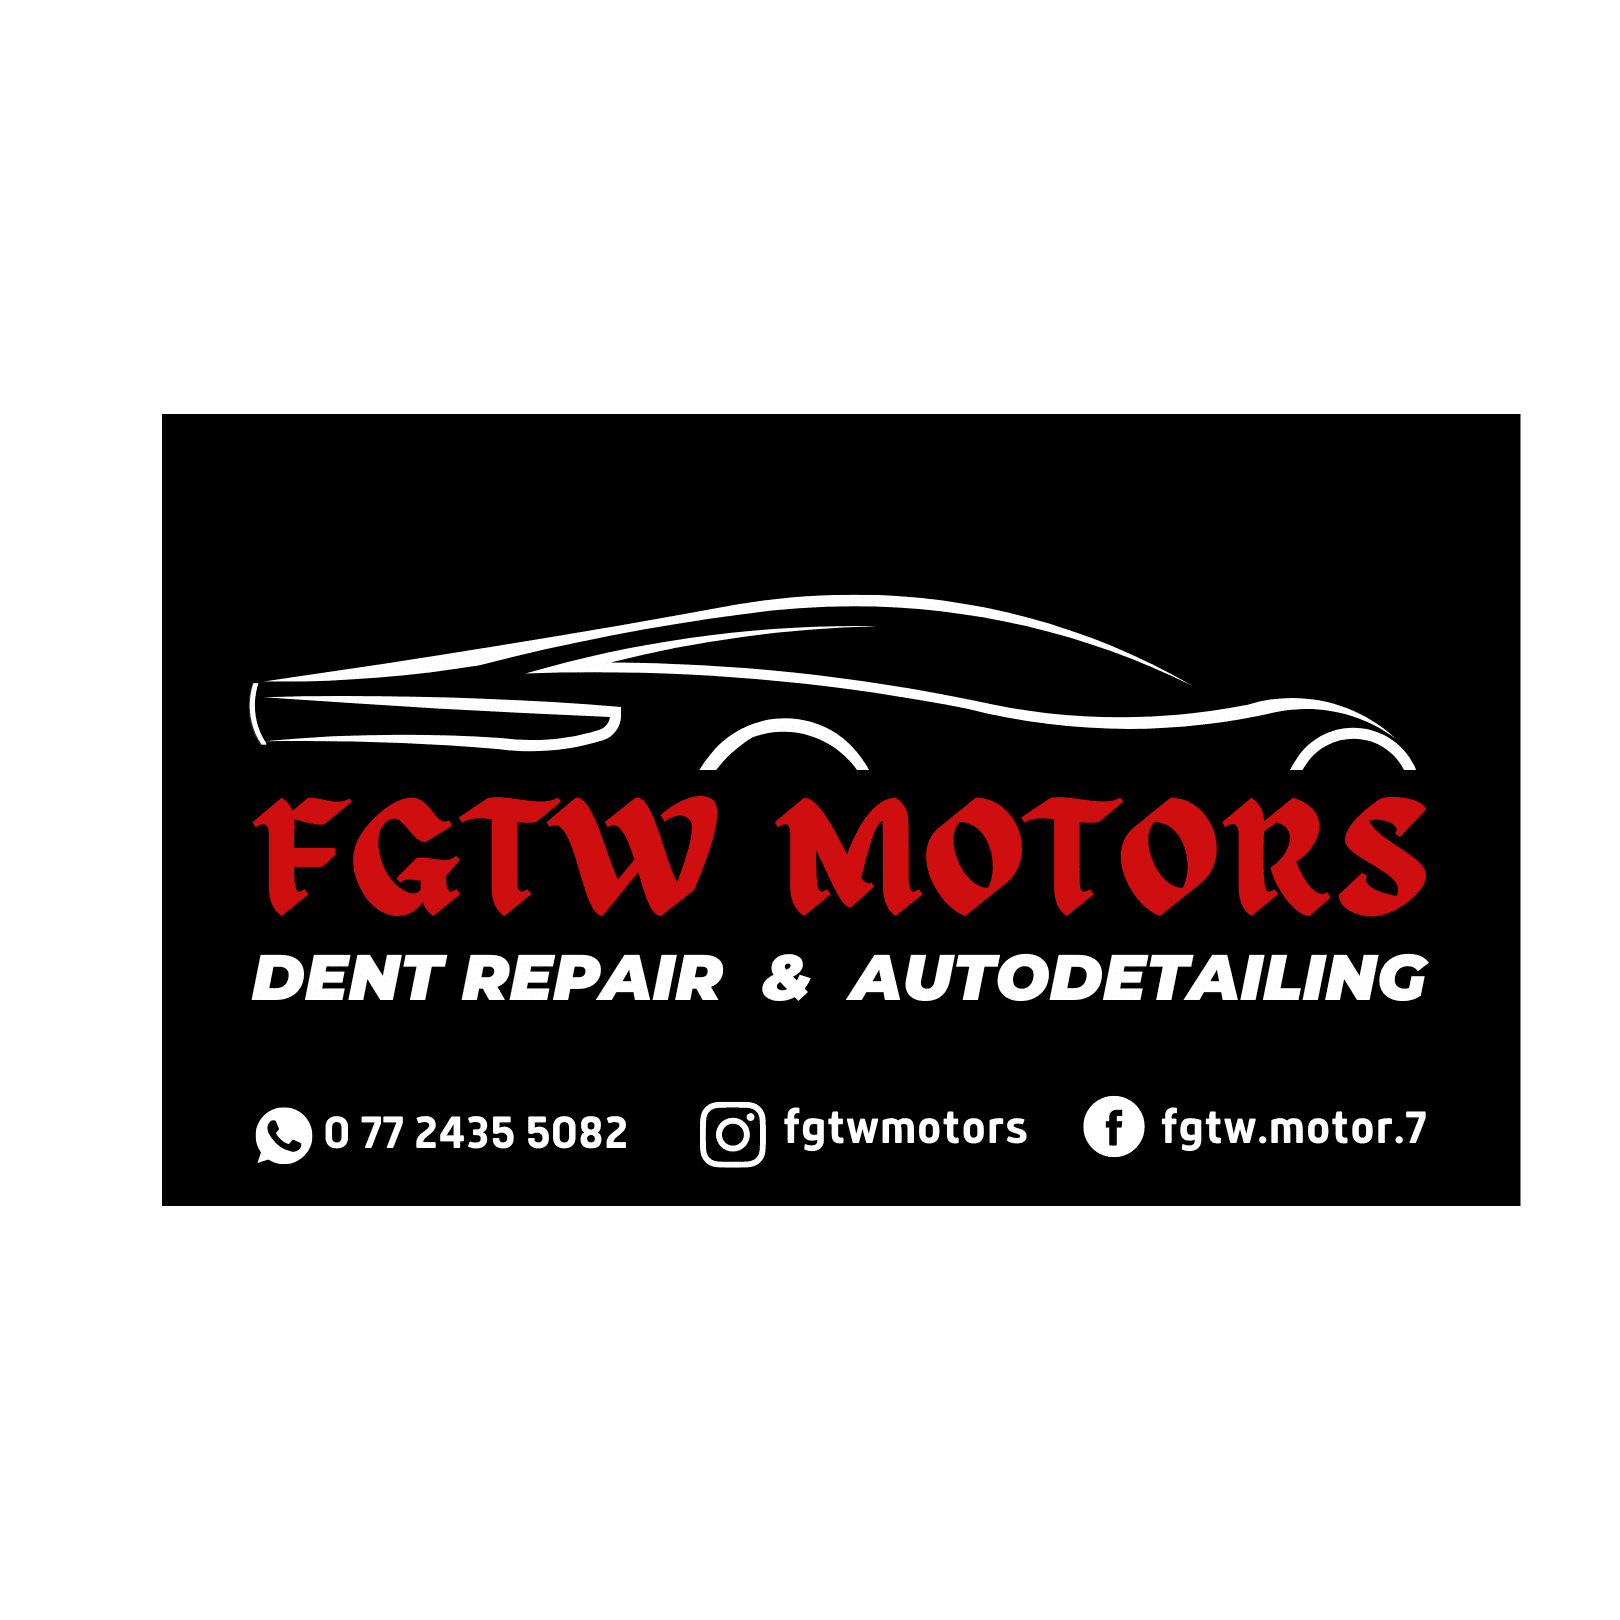 Images FGTW Motors Ltd